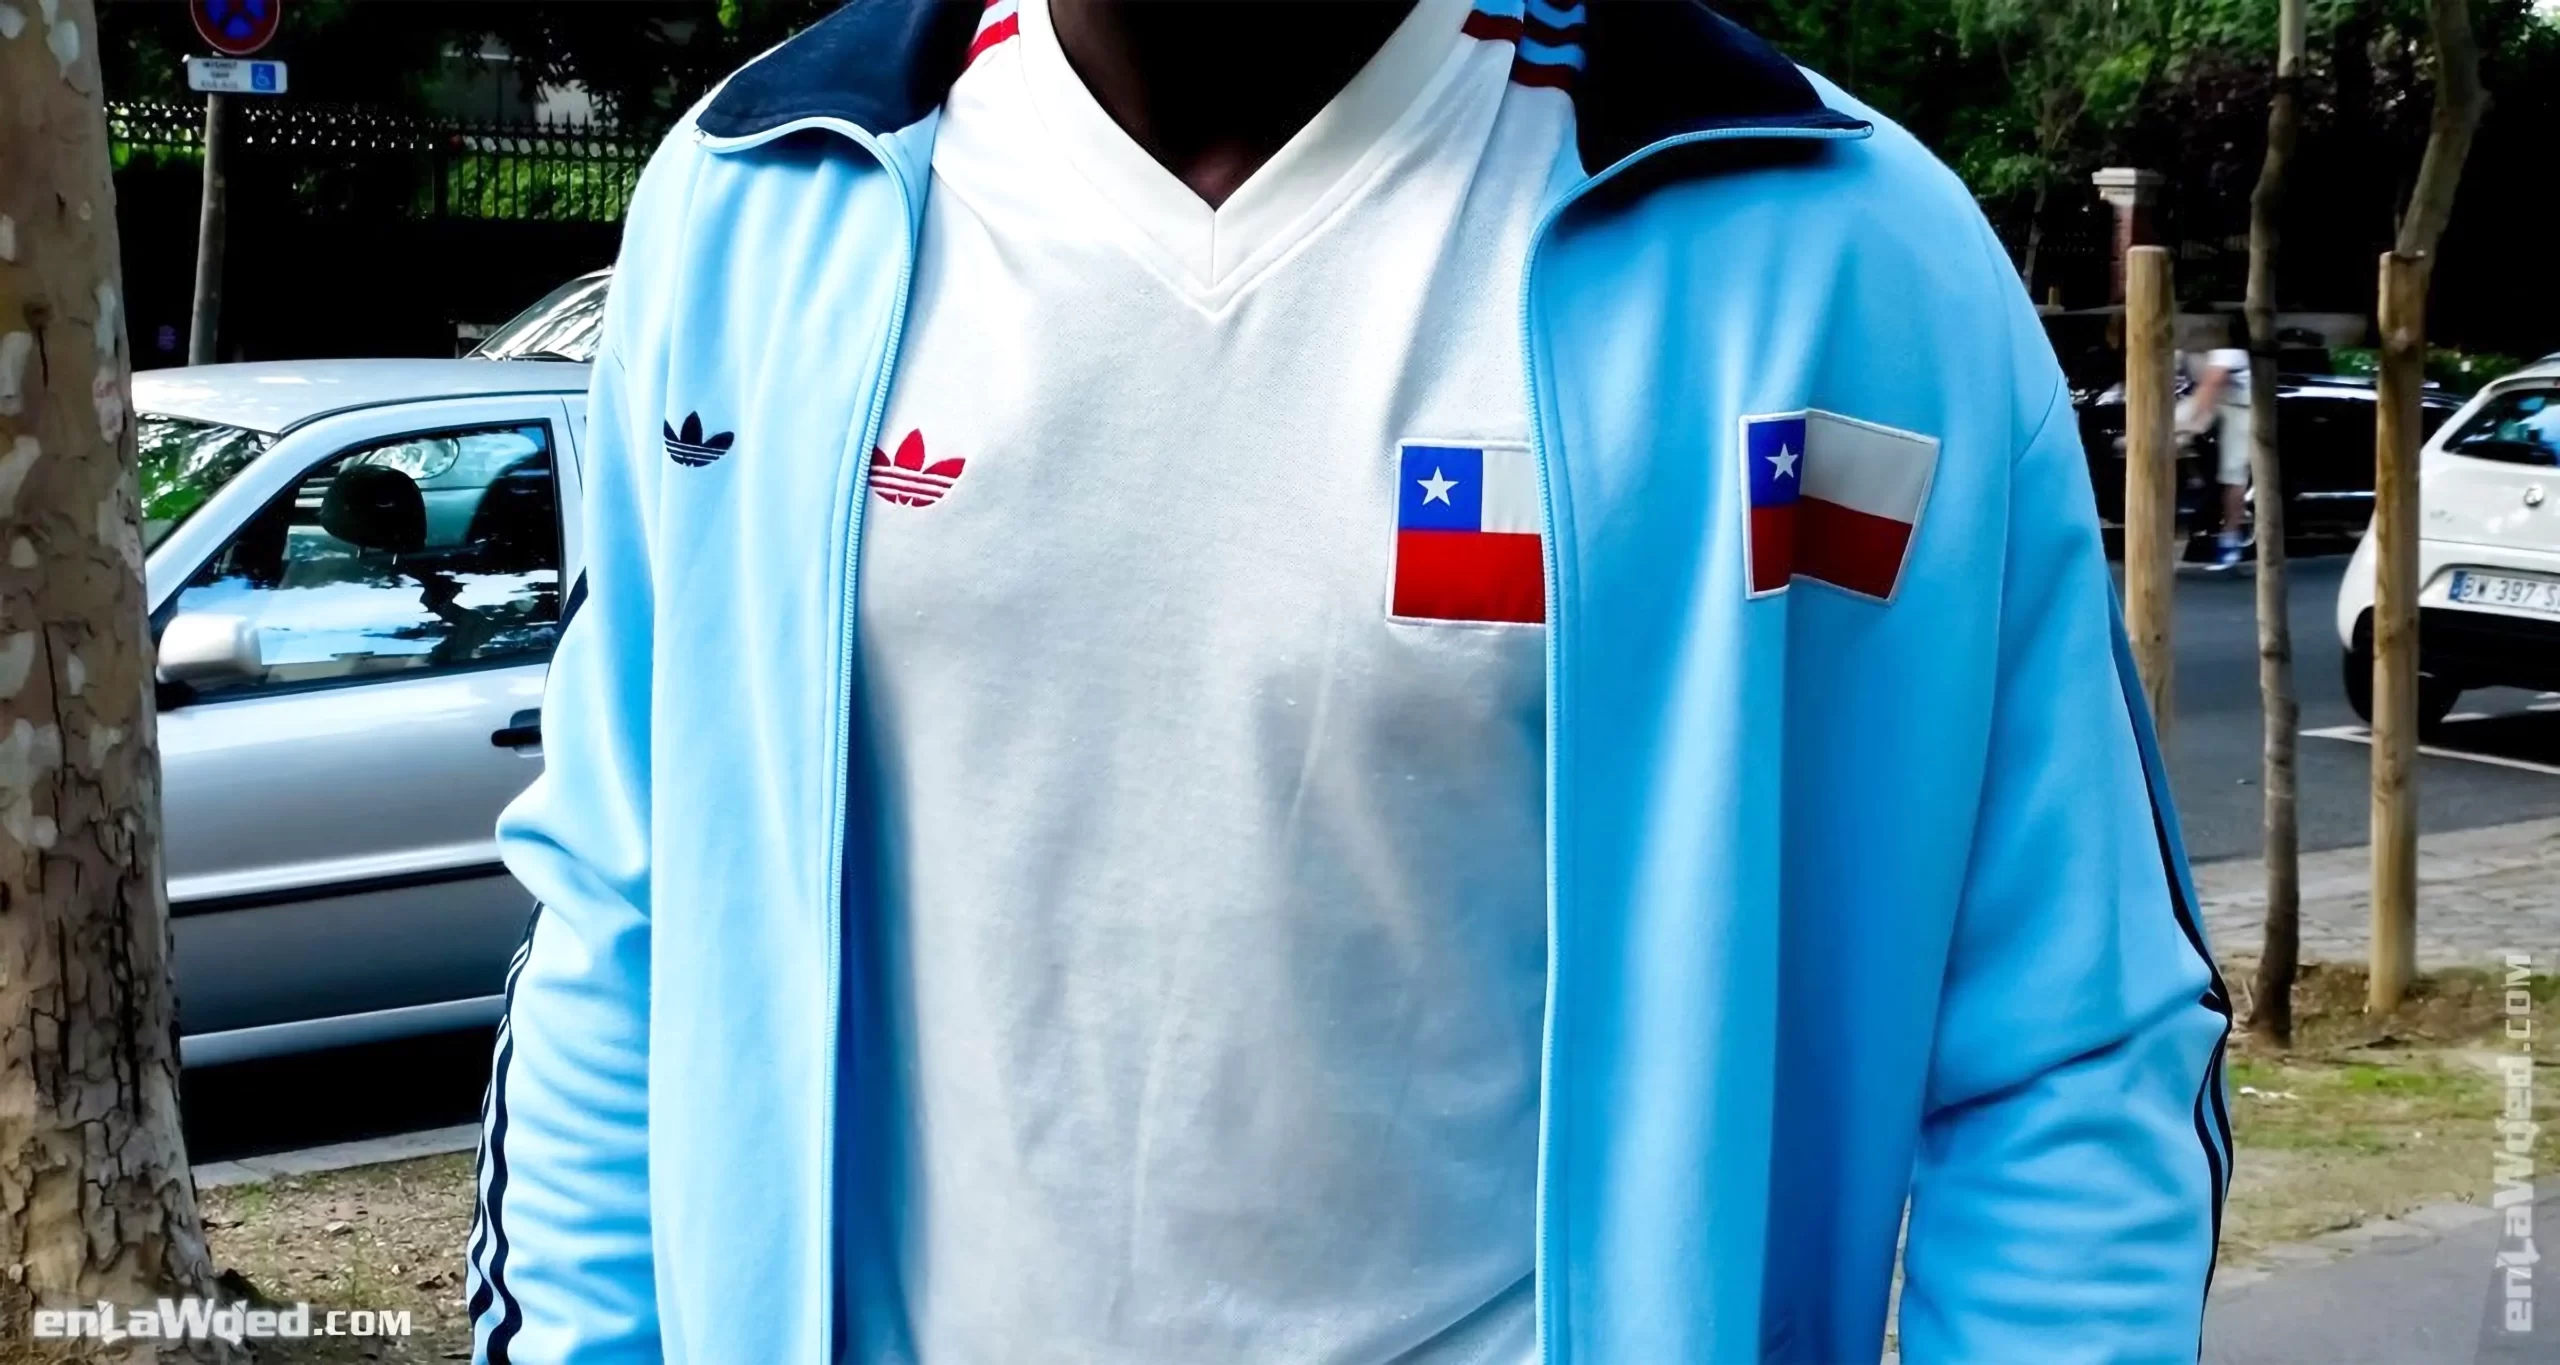 Men’s 2003 Chile ’82 Soto TT by Adidas Originals: Fascinating (EnLawded.com file #lmc4i9j62jb4f5h03rl)